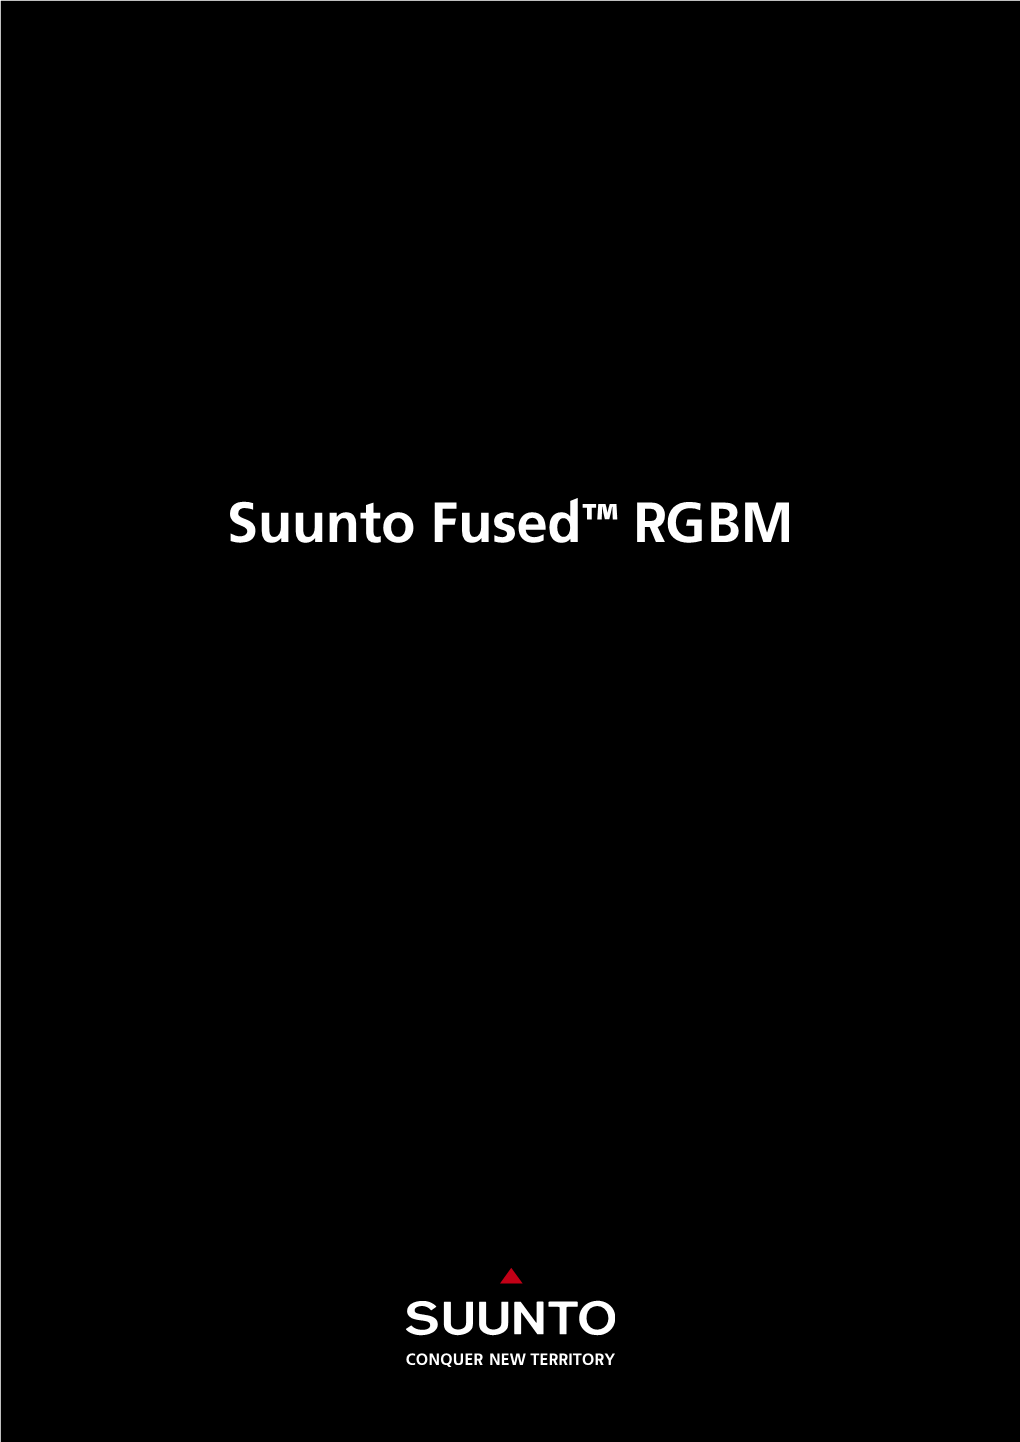 Suunto Fused™ RGBM Copyright © 2012 by Suunto Oy